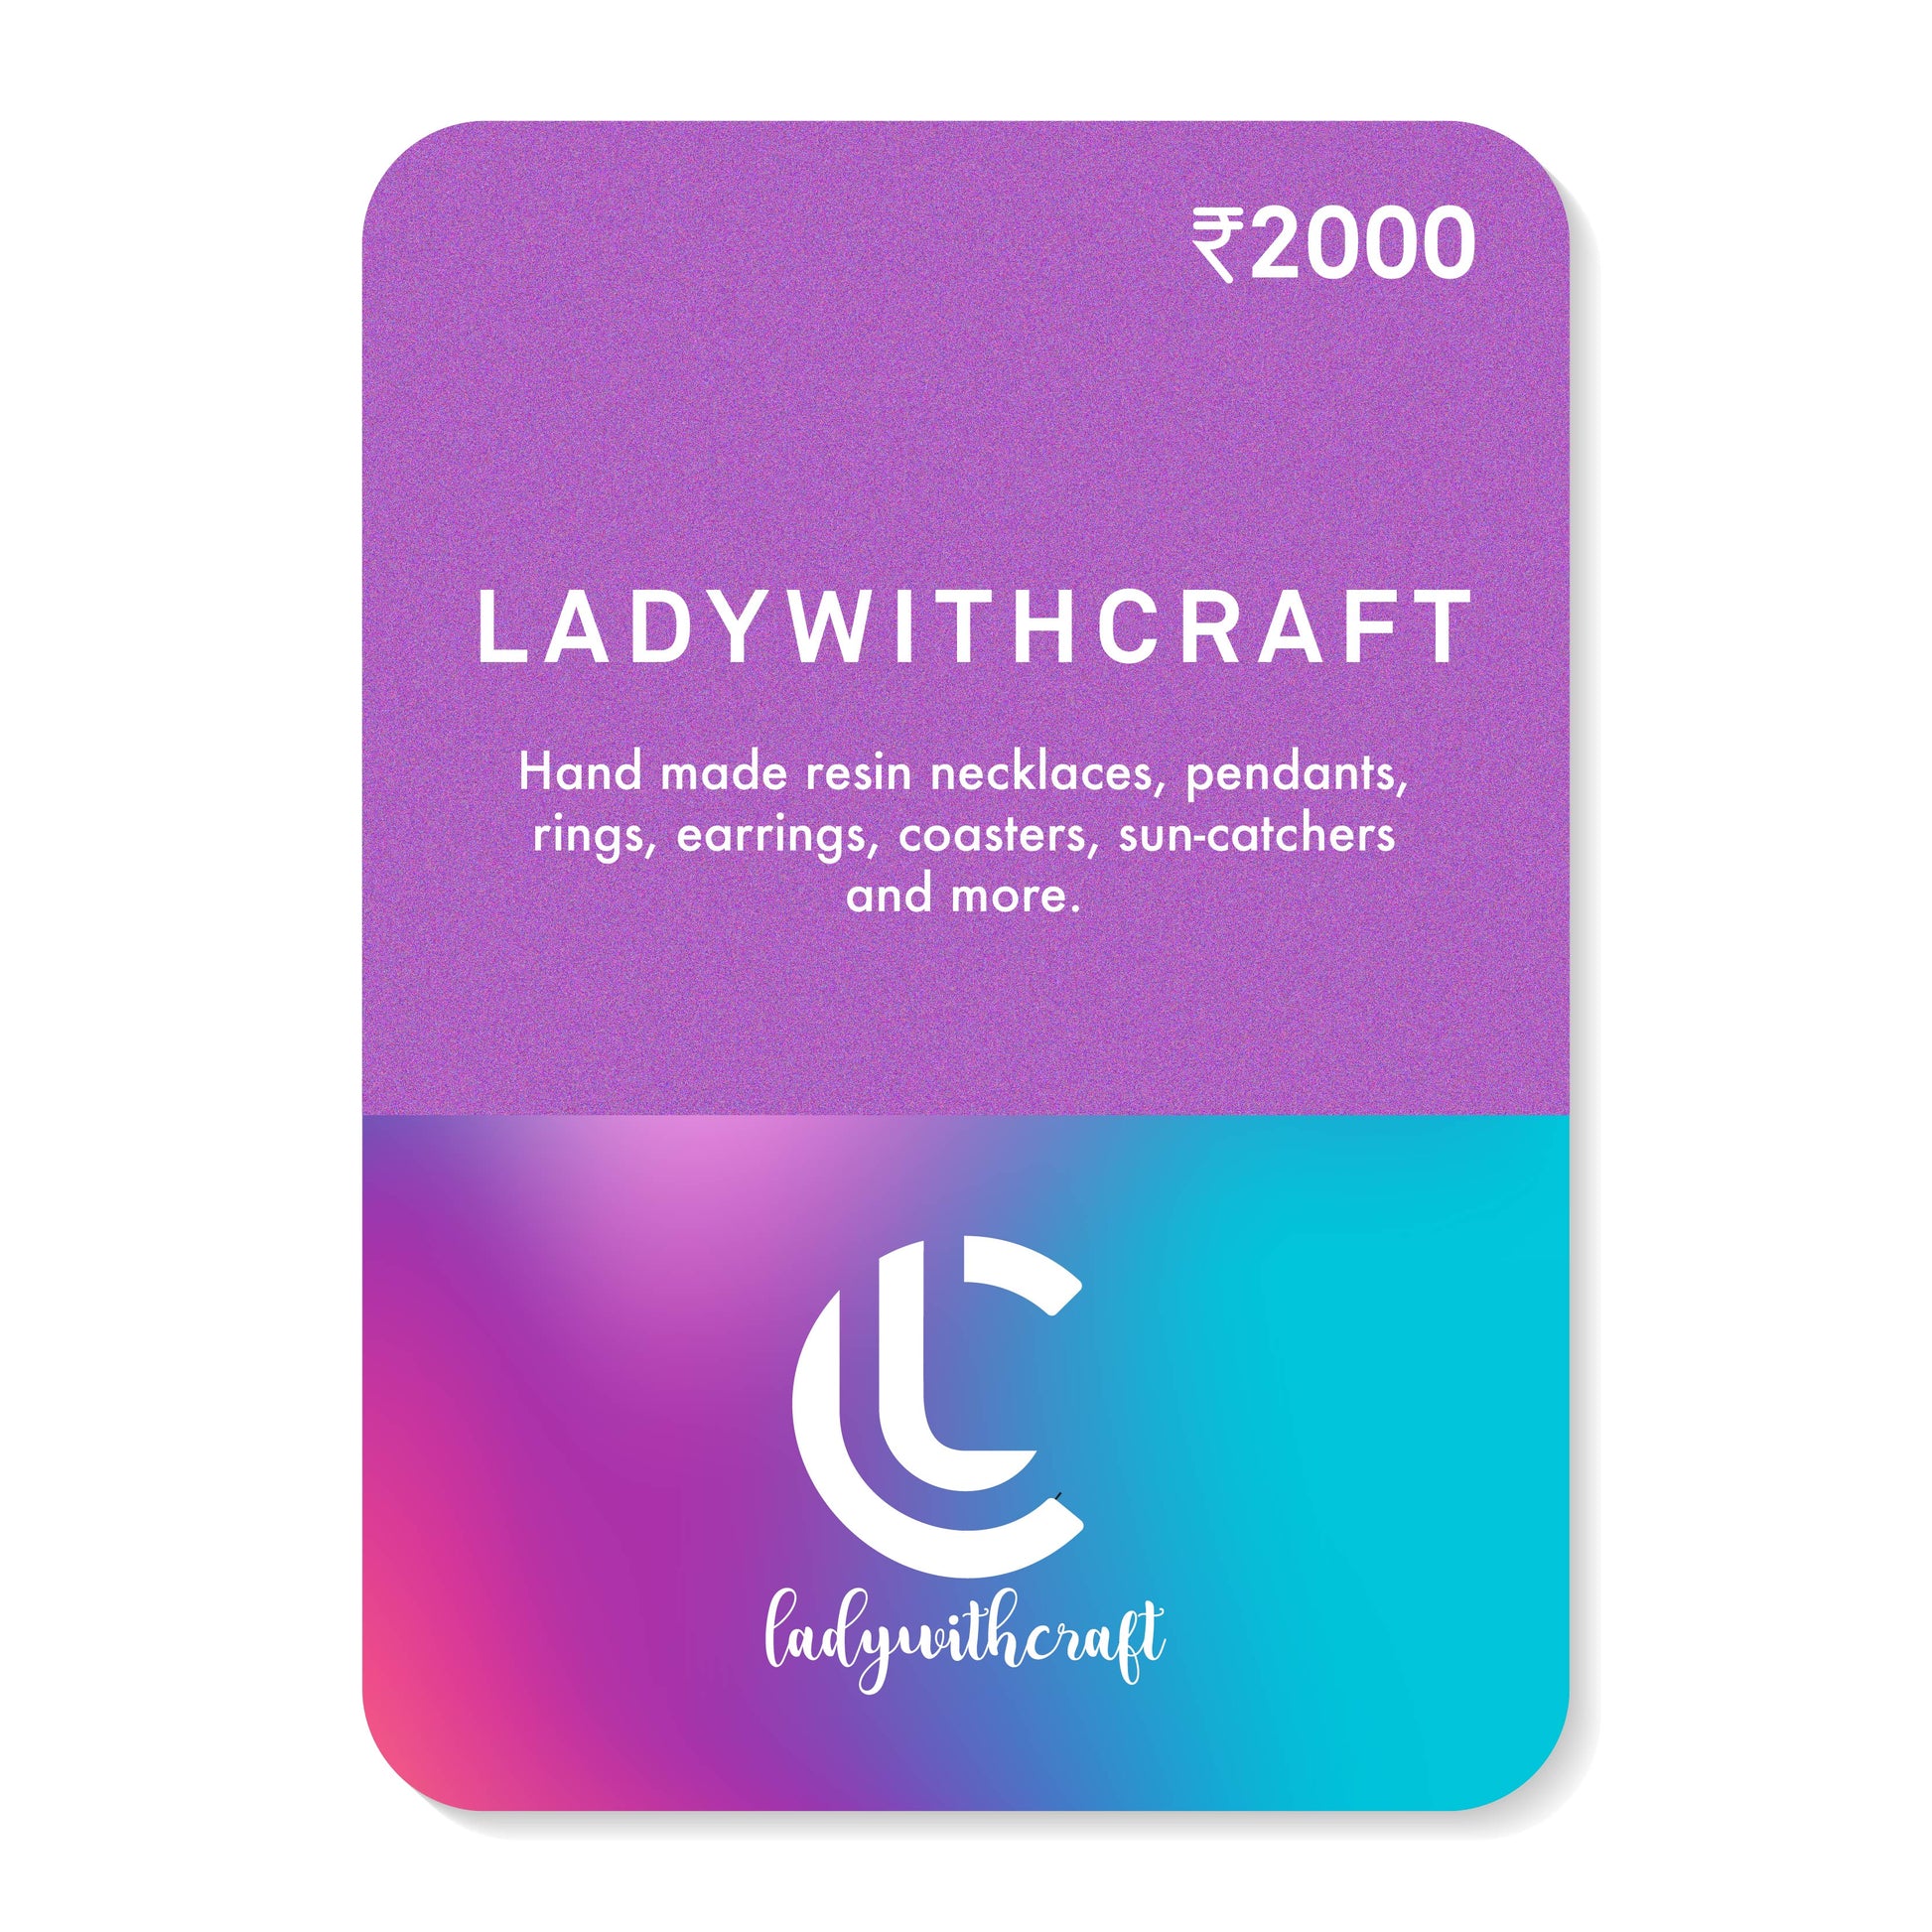 Ladywithcraft's Gift Card - Ladywithcraft